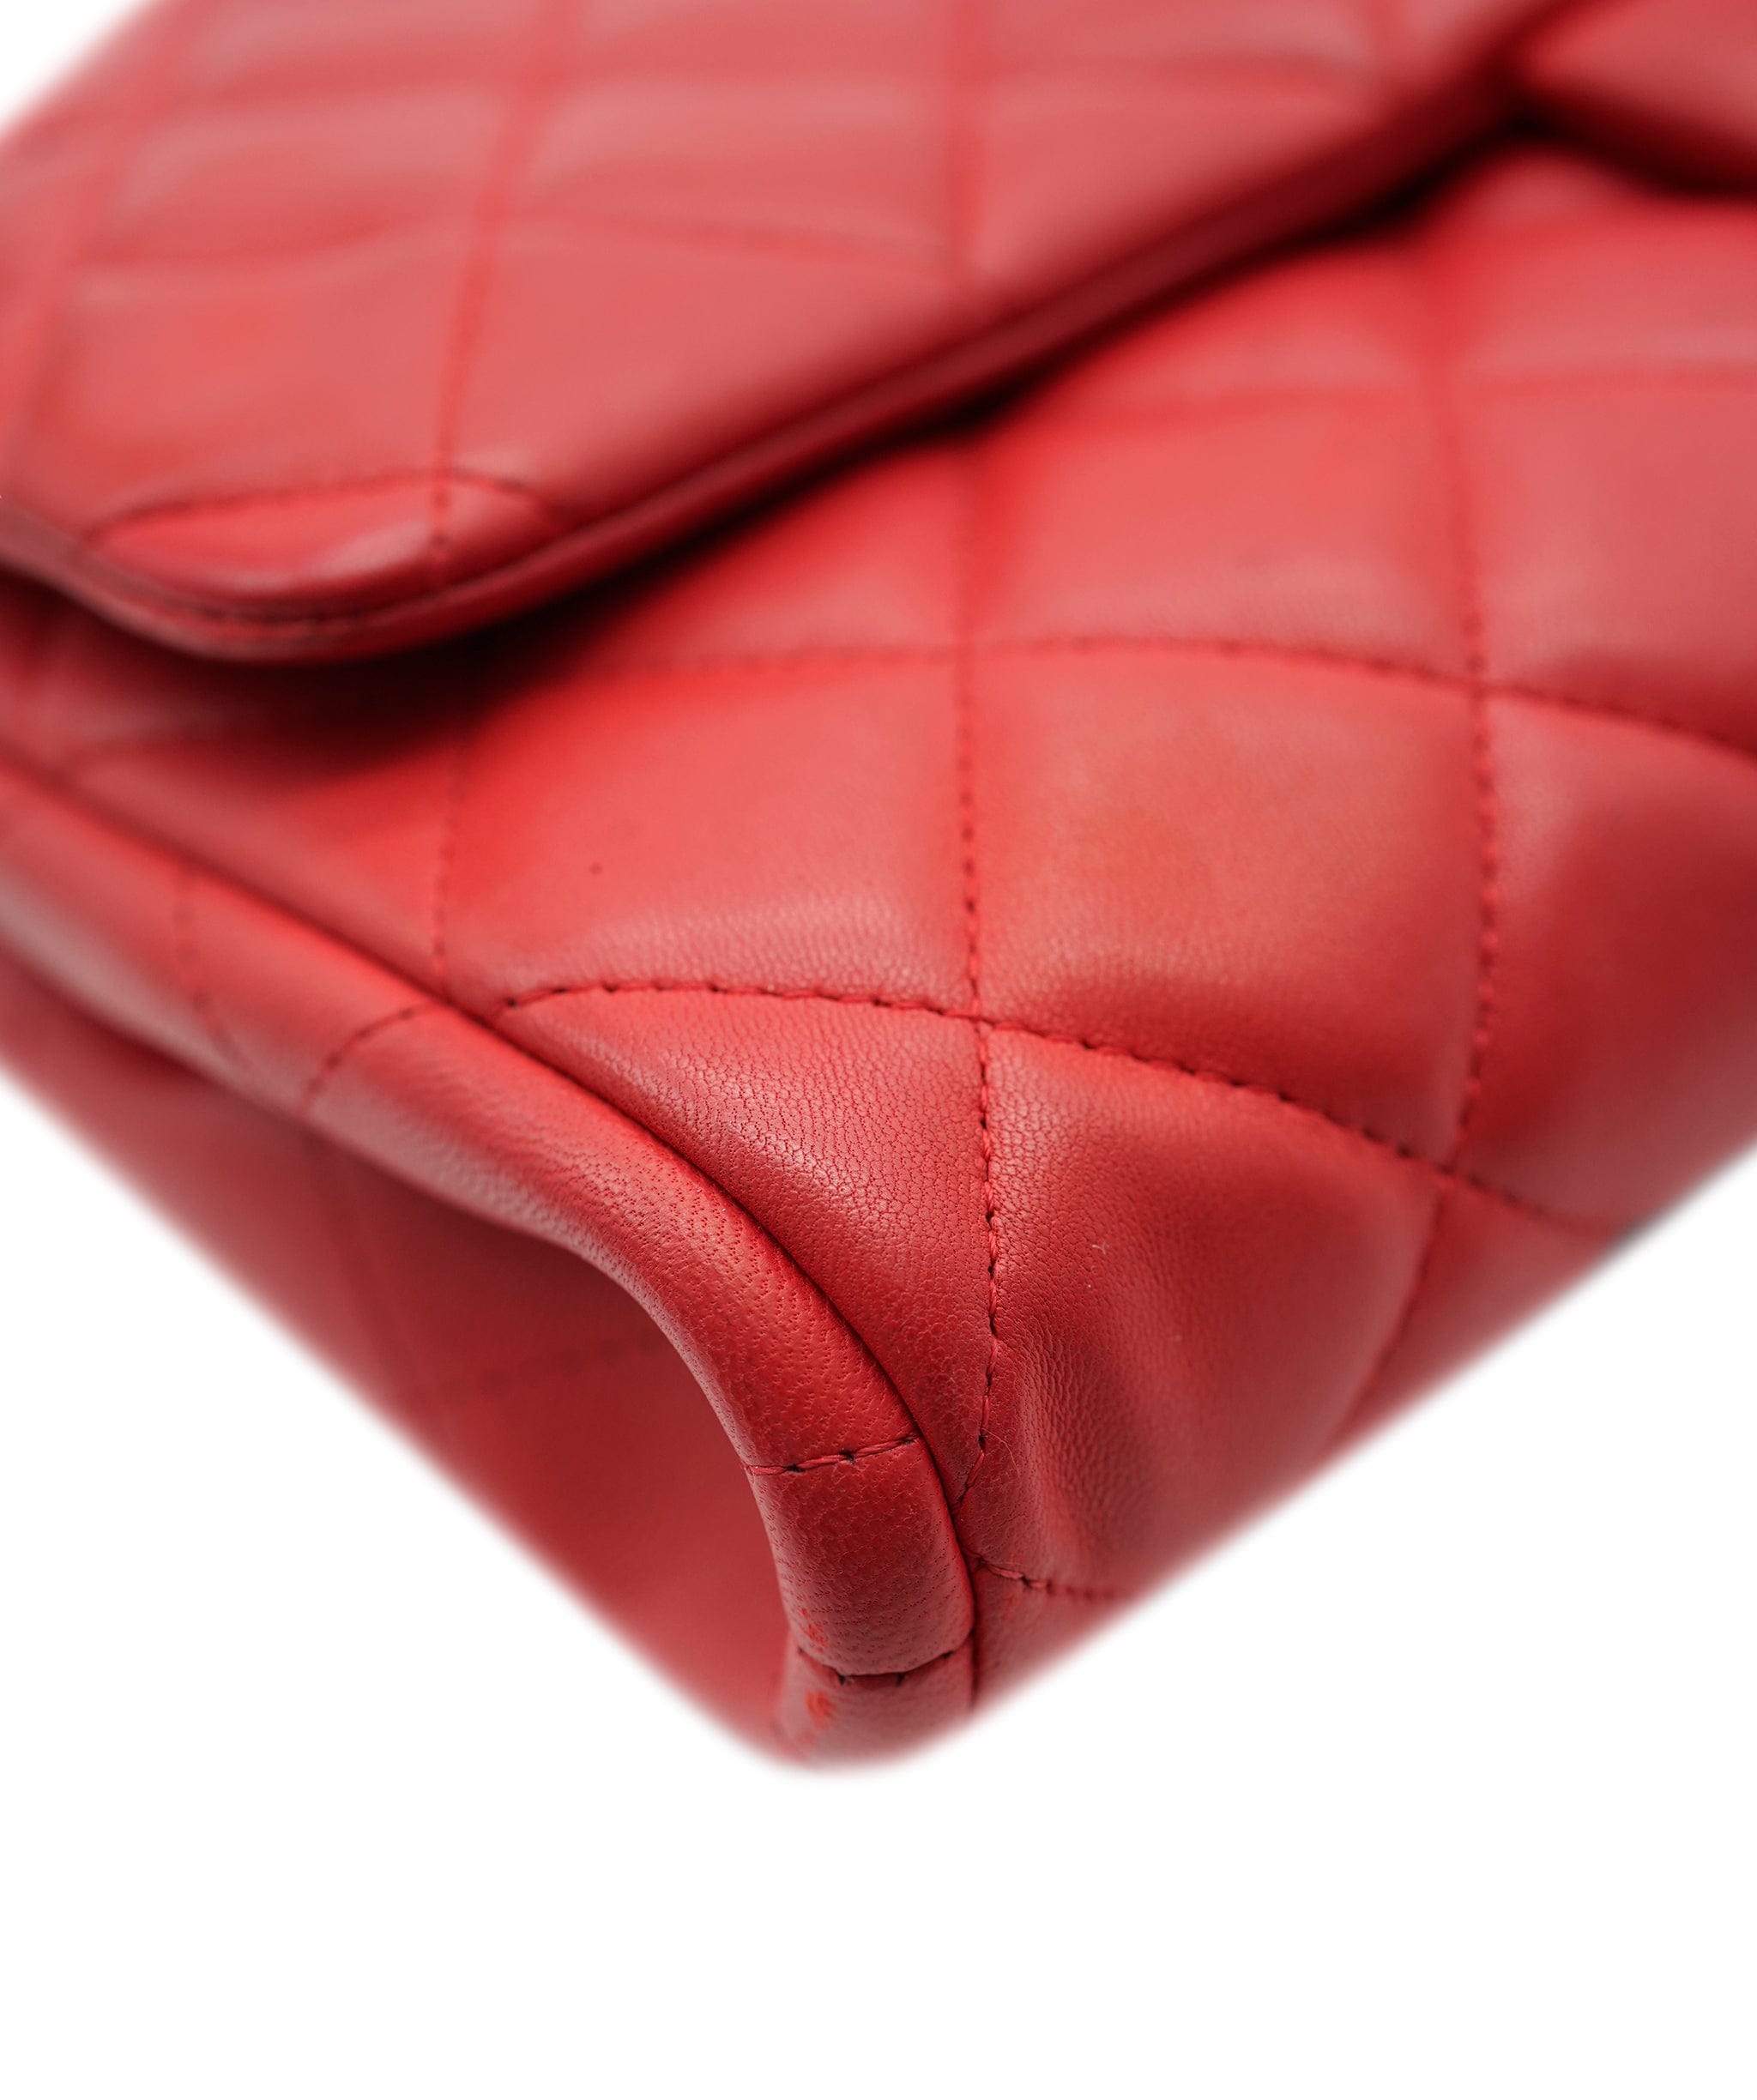 Chanel Chanel Red Clutch Shoulder Bag  ALC1257